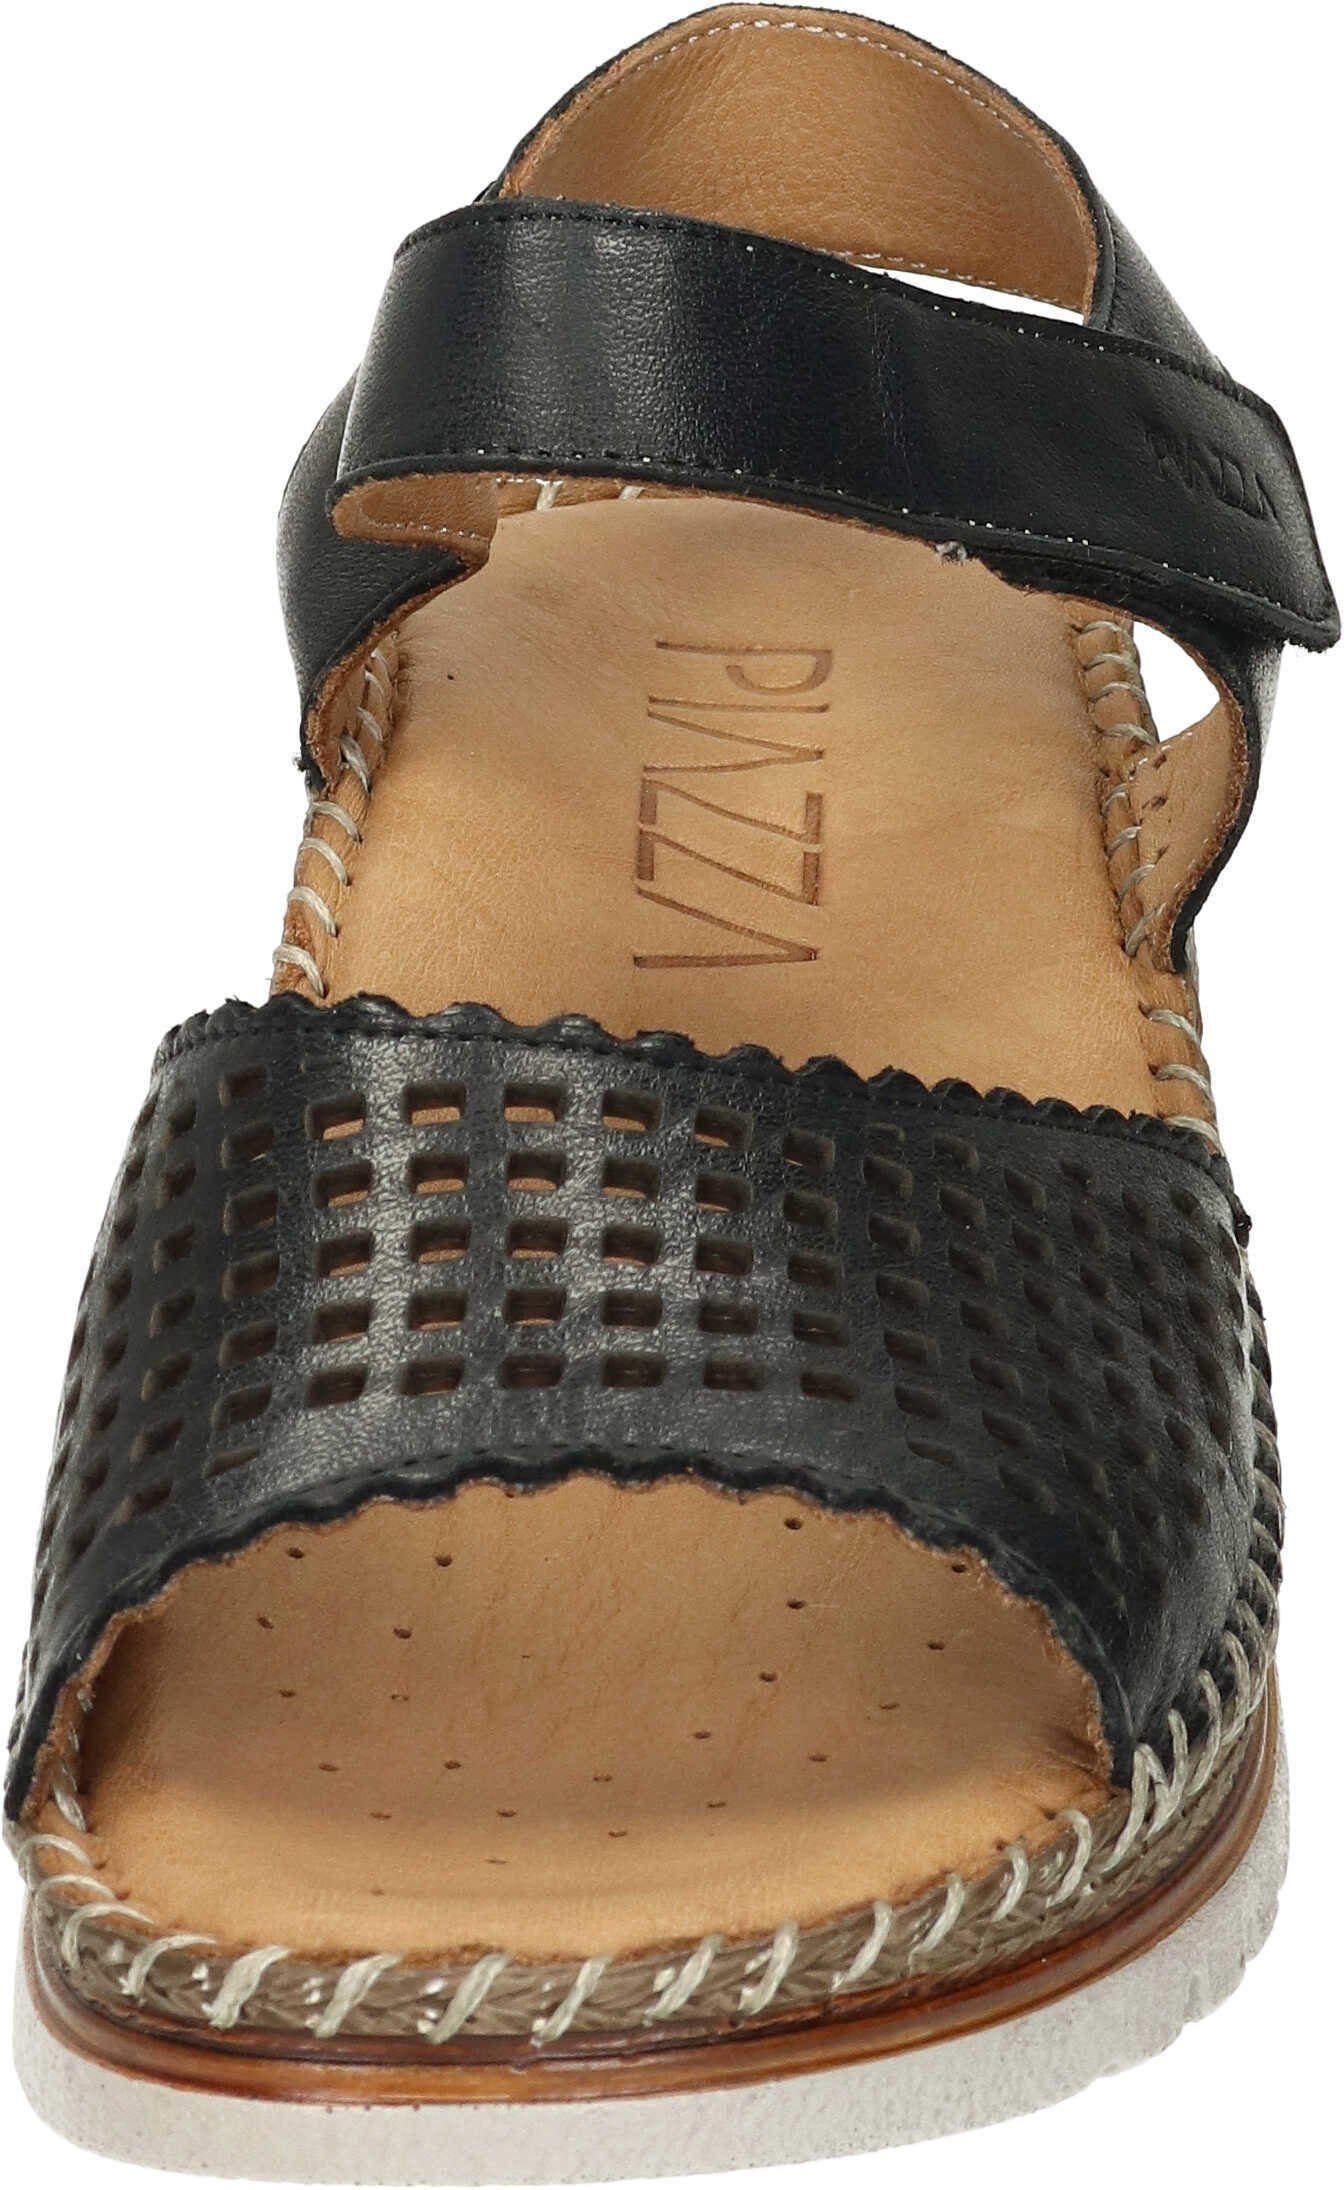 Sandalen aus Sandalette Piazza schwarz echtem Leder